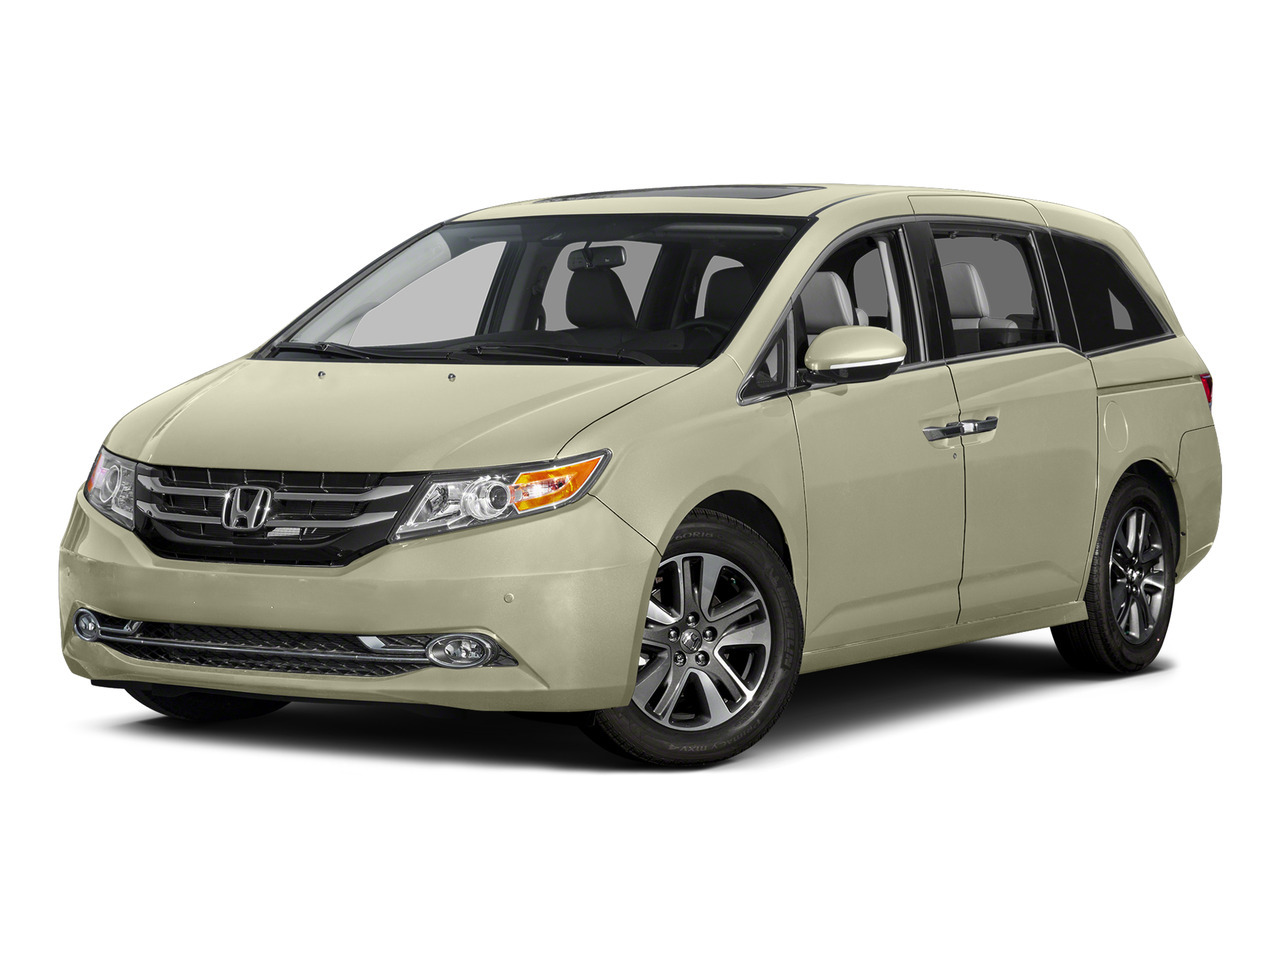 2015 Honda Odyssey Touring - NAV| BT | Rear CAM| Sunroof| Leather|DVD